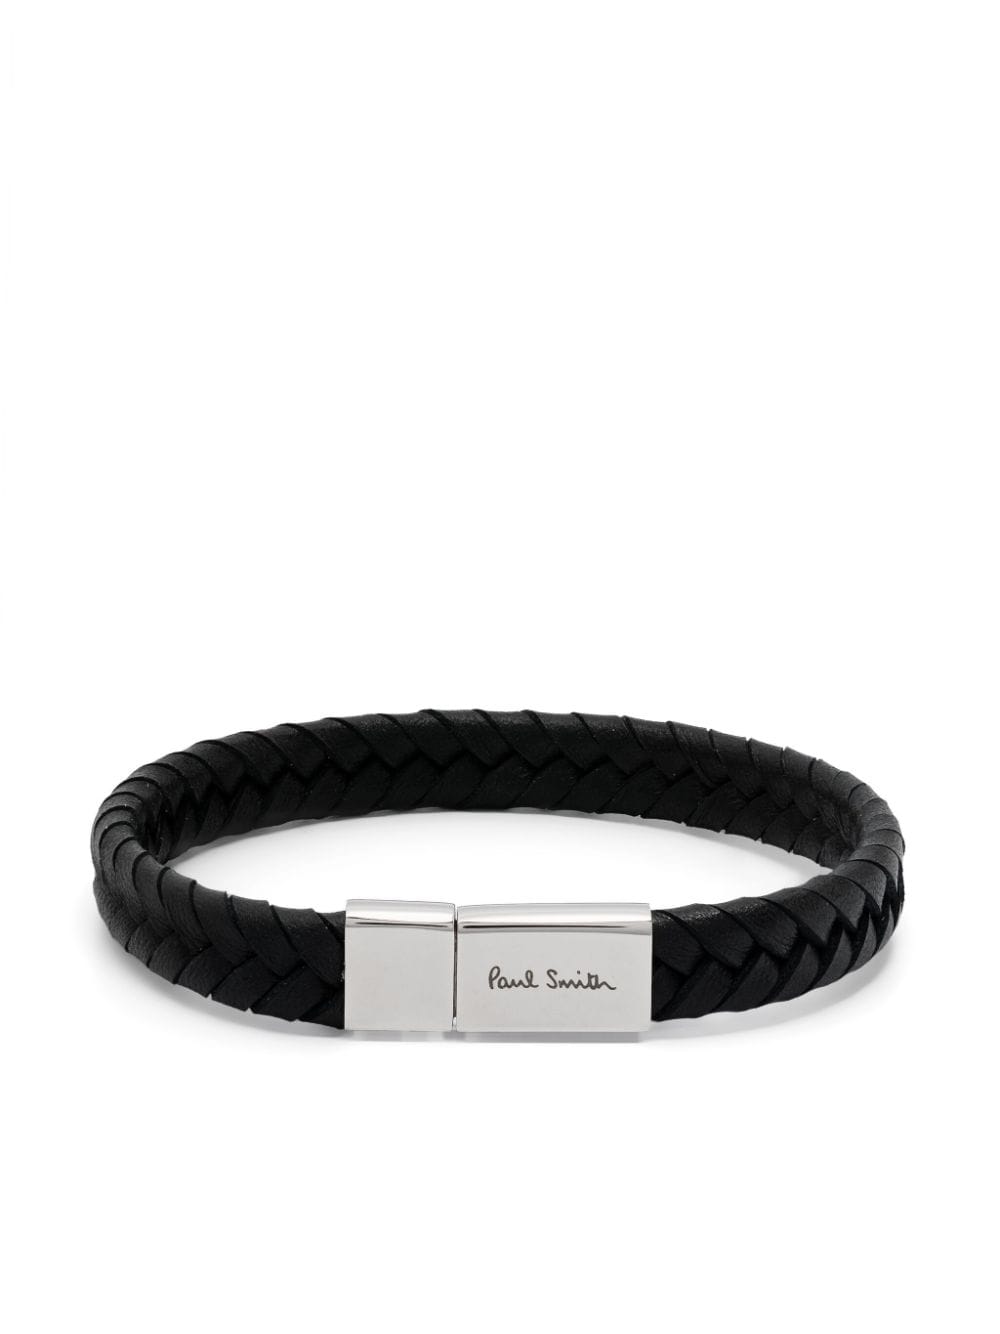 Paul Smith Braided Leather Bracelet In Black